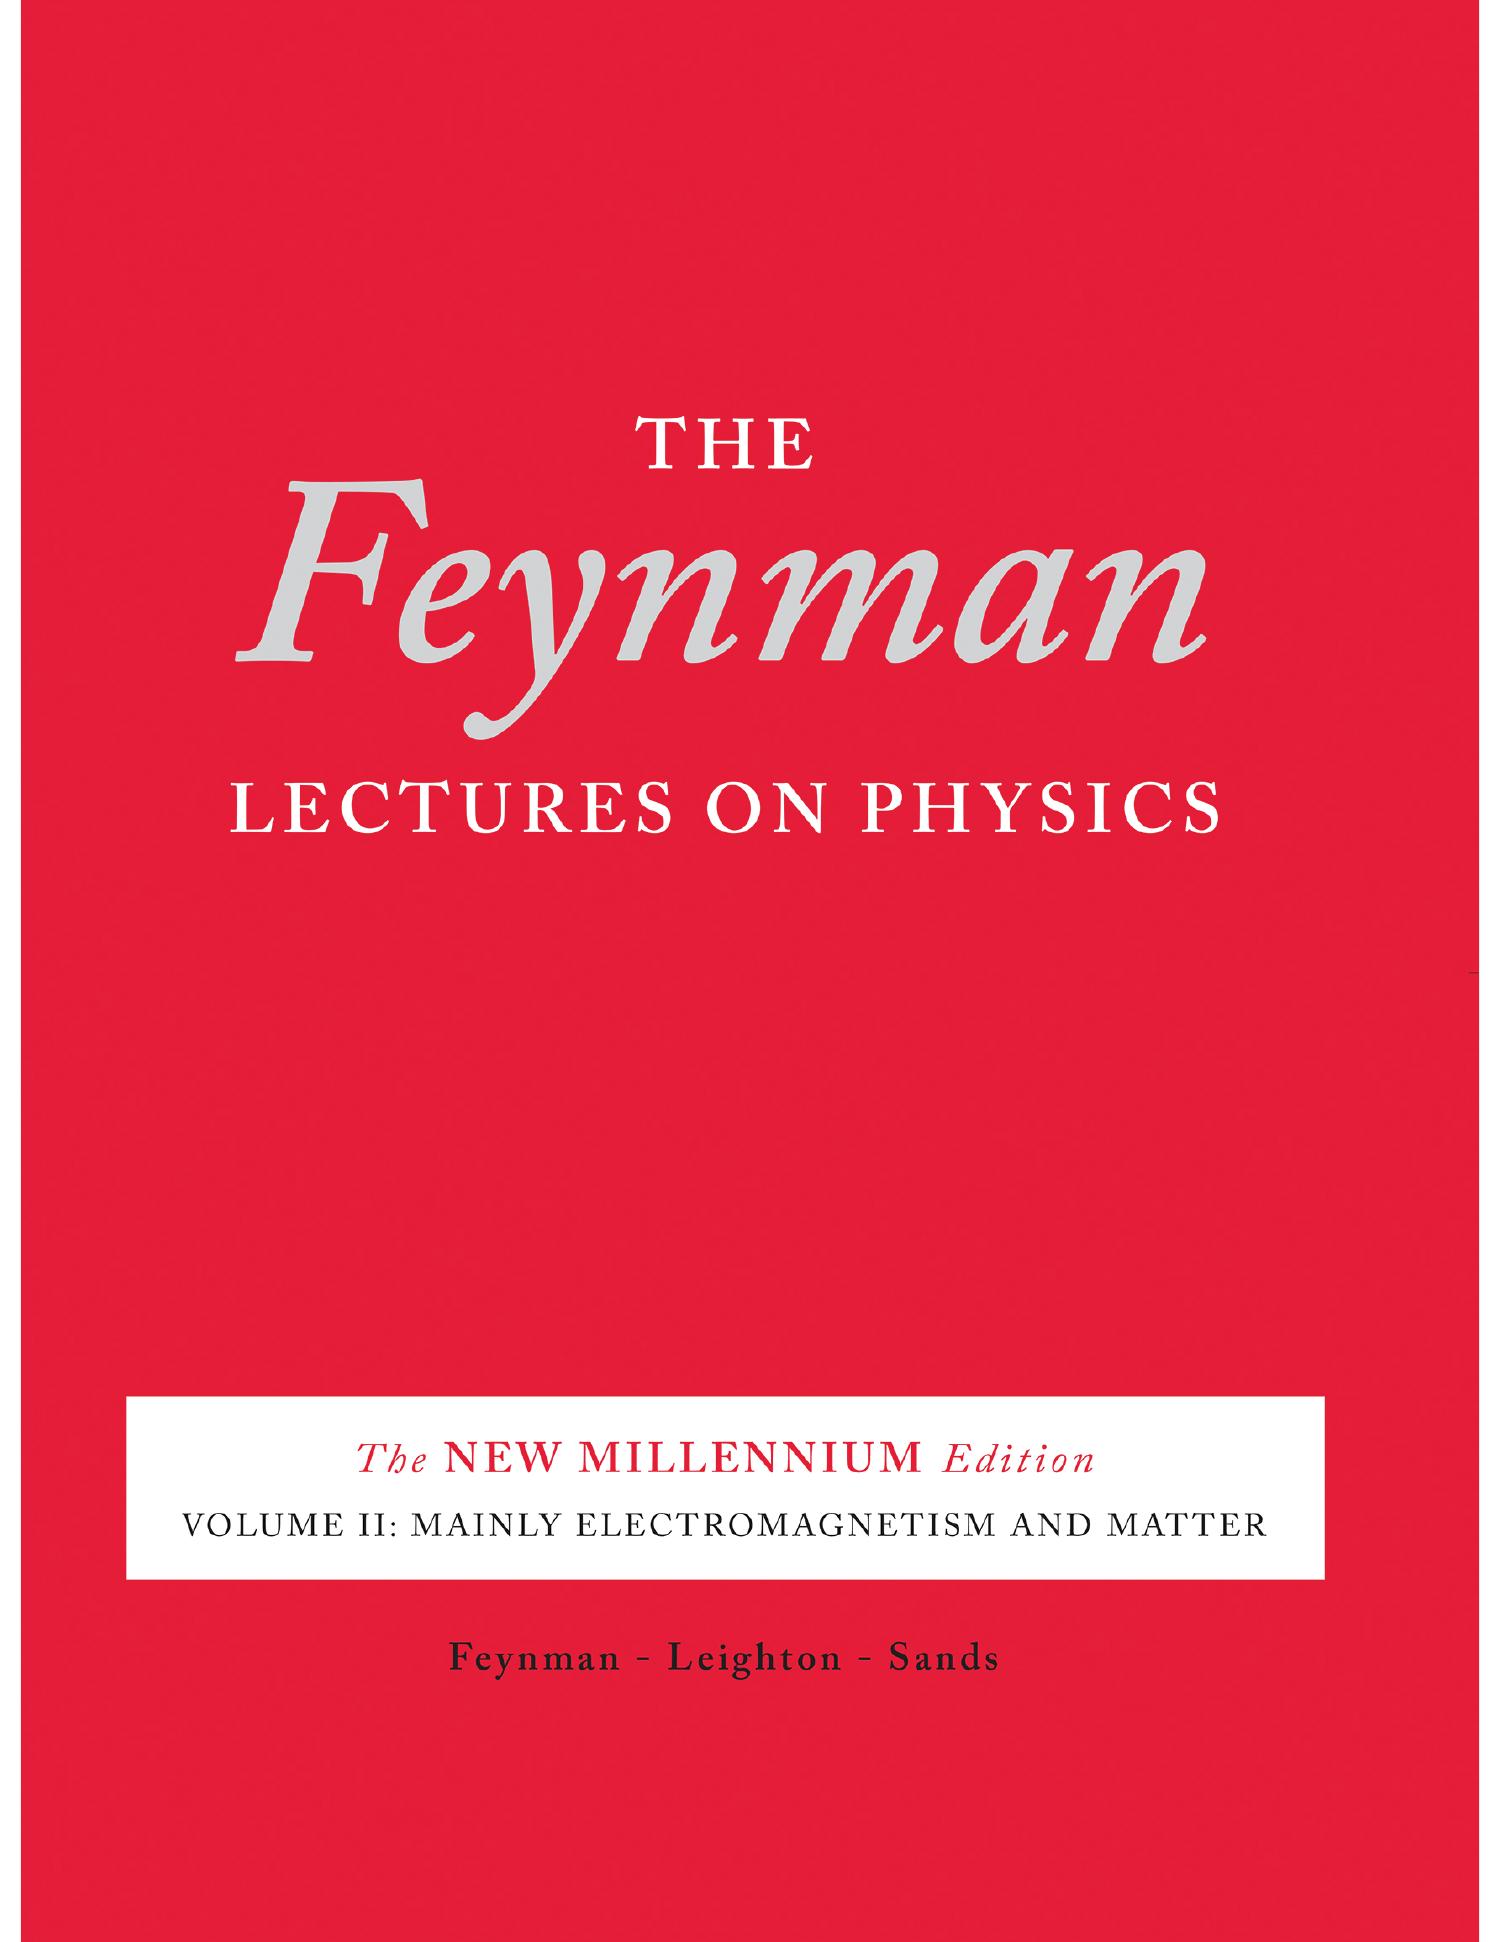 richard feynman lectures on physics pdf